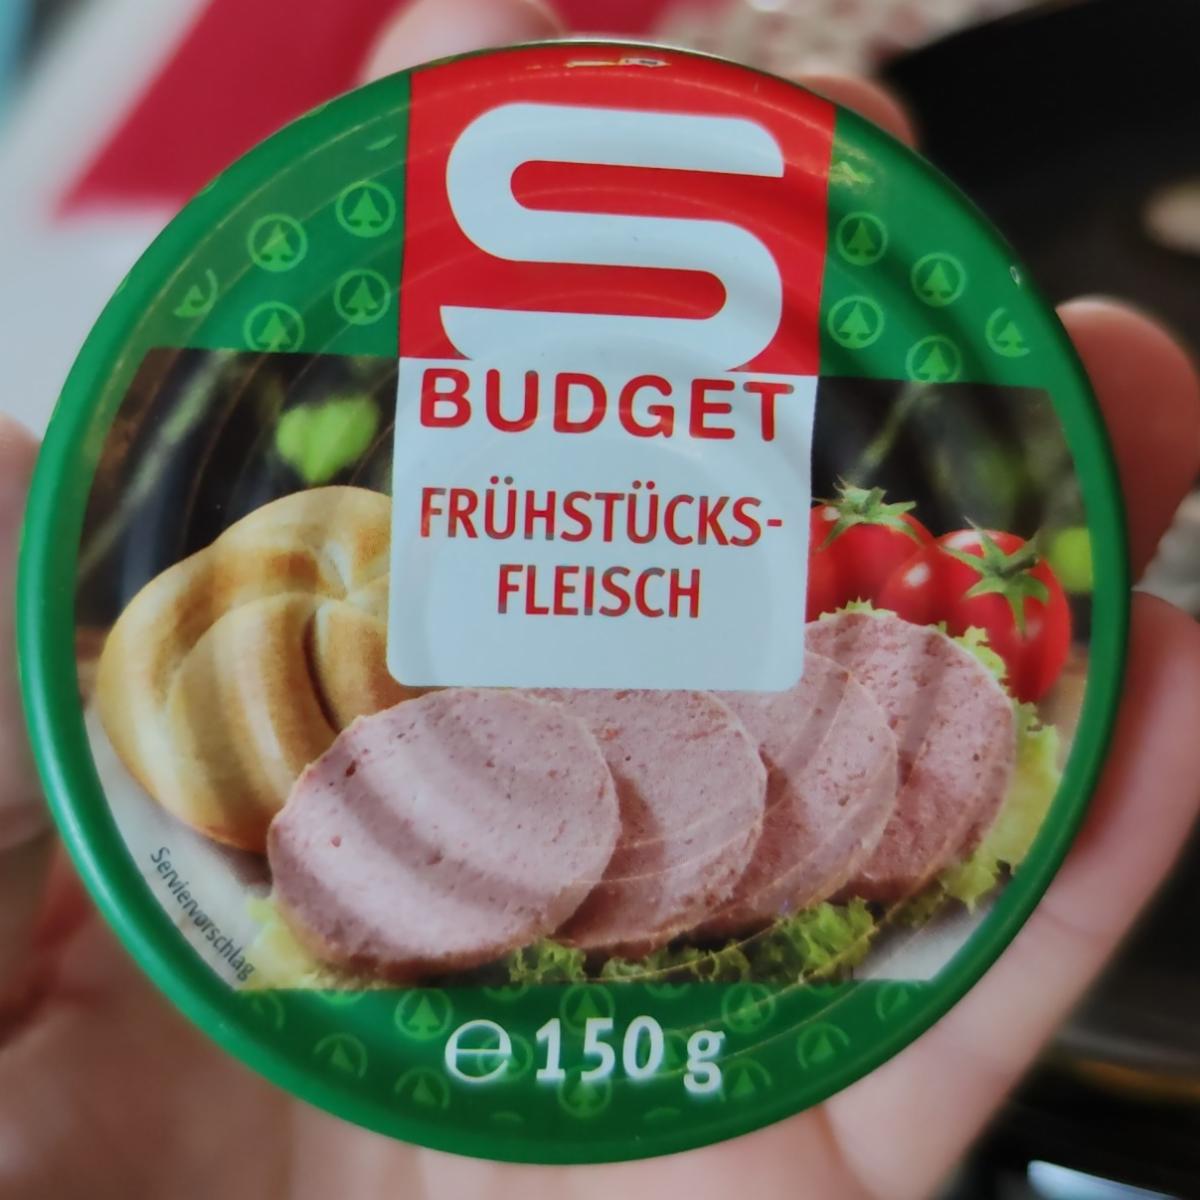 Fotografie - Frühstücks-fleisch S Budget